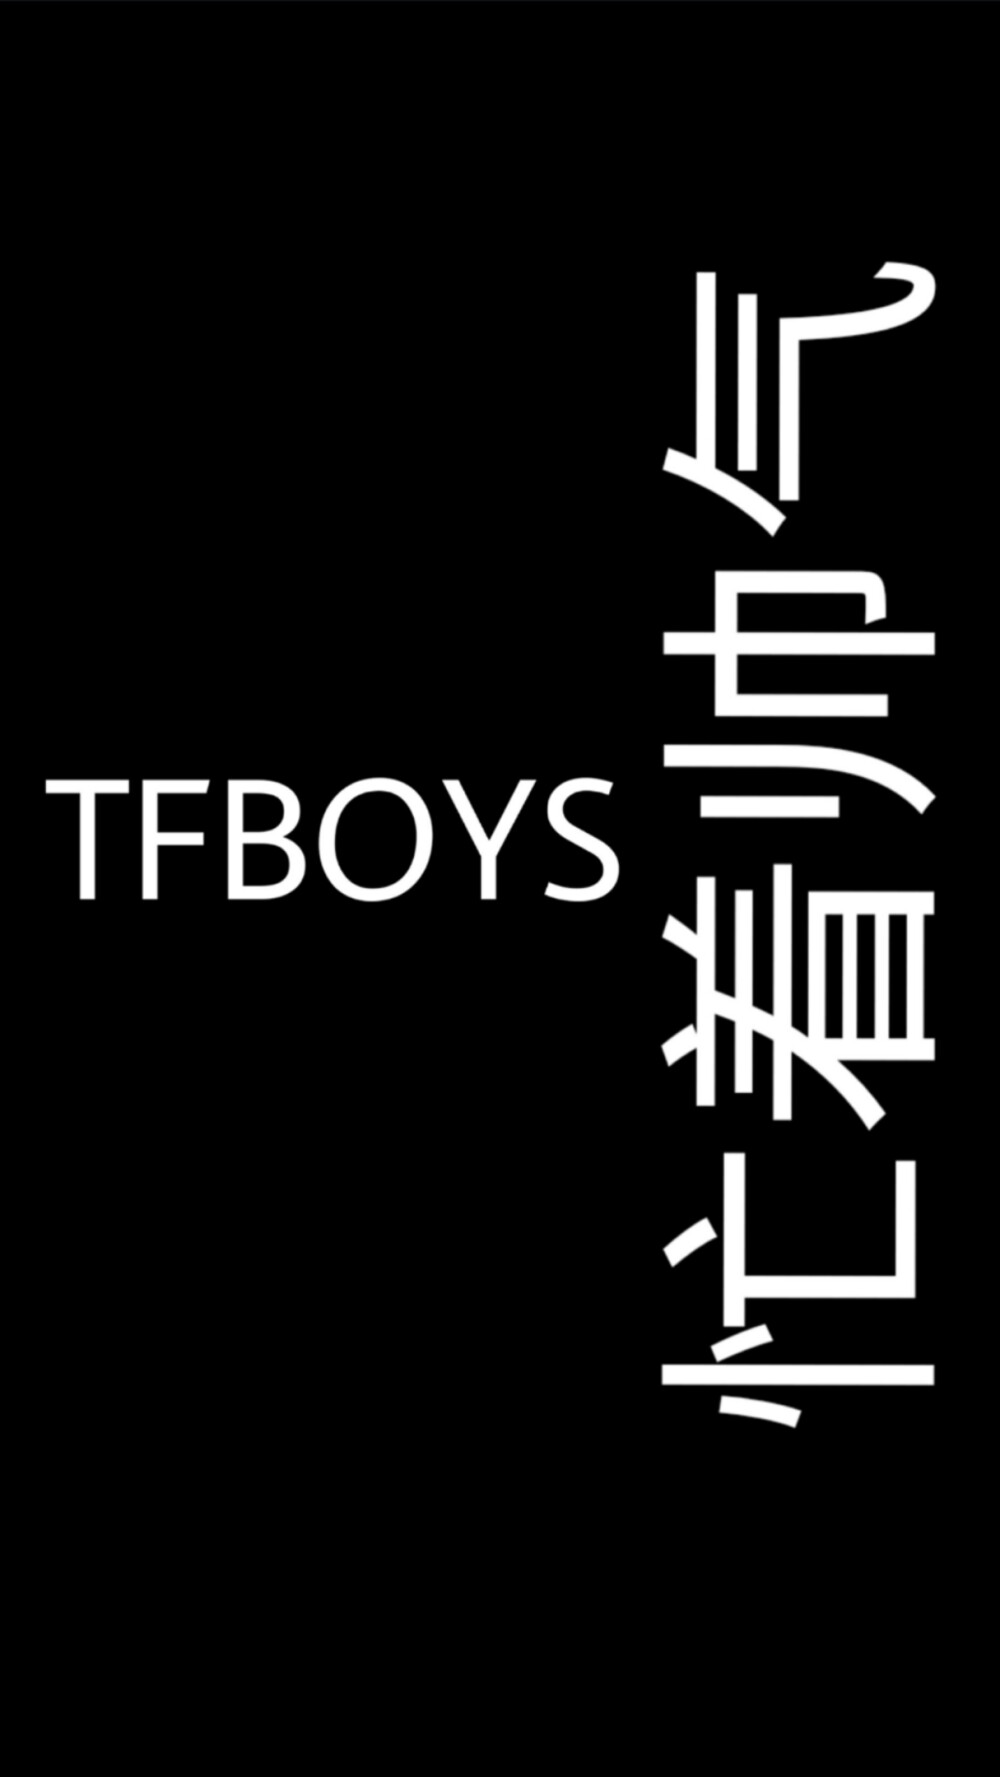 tfboys背景图 文字图片